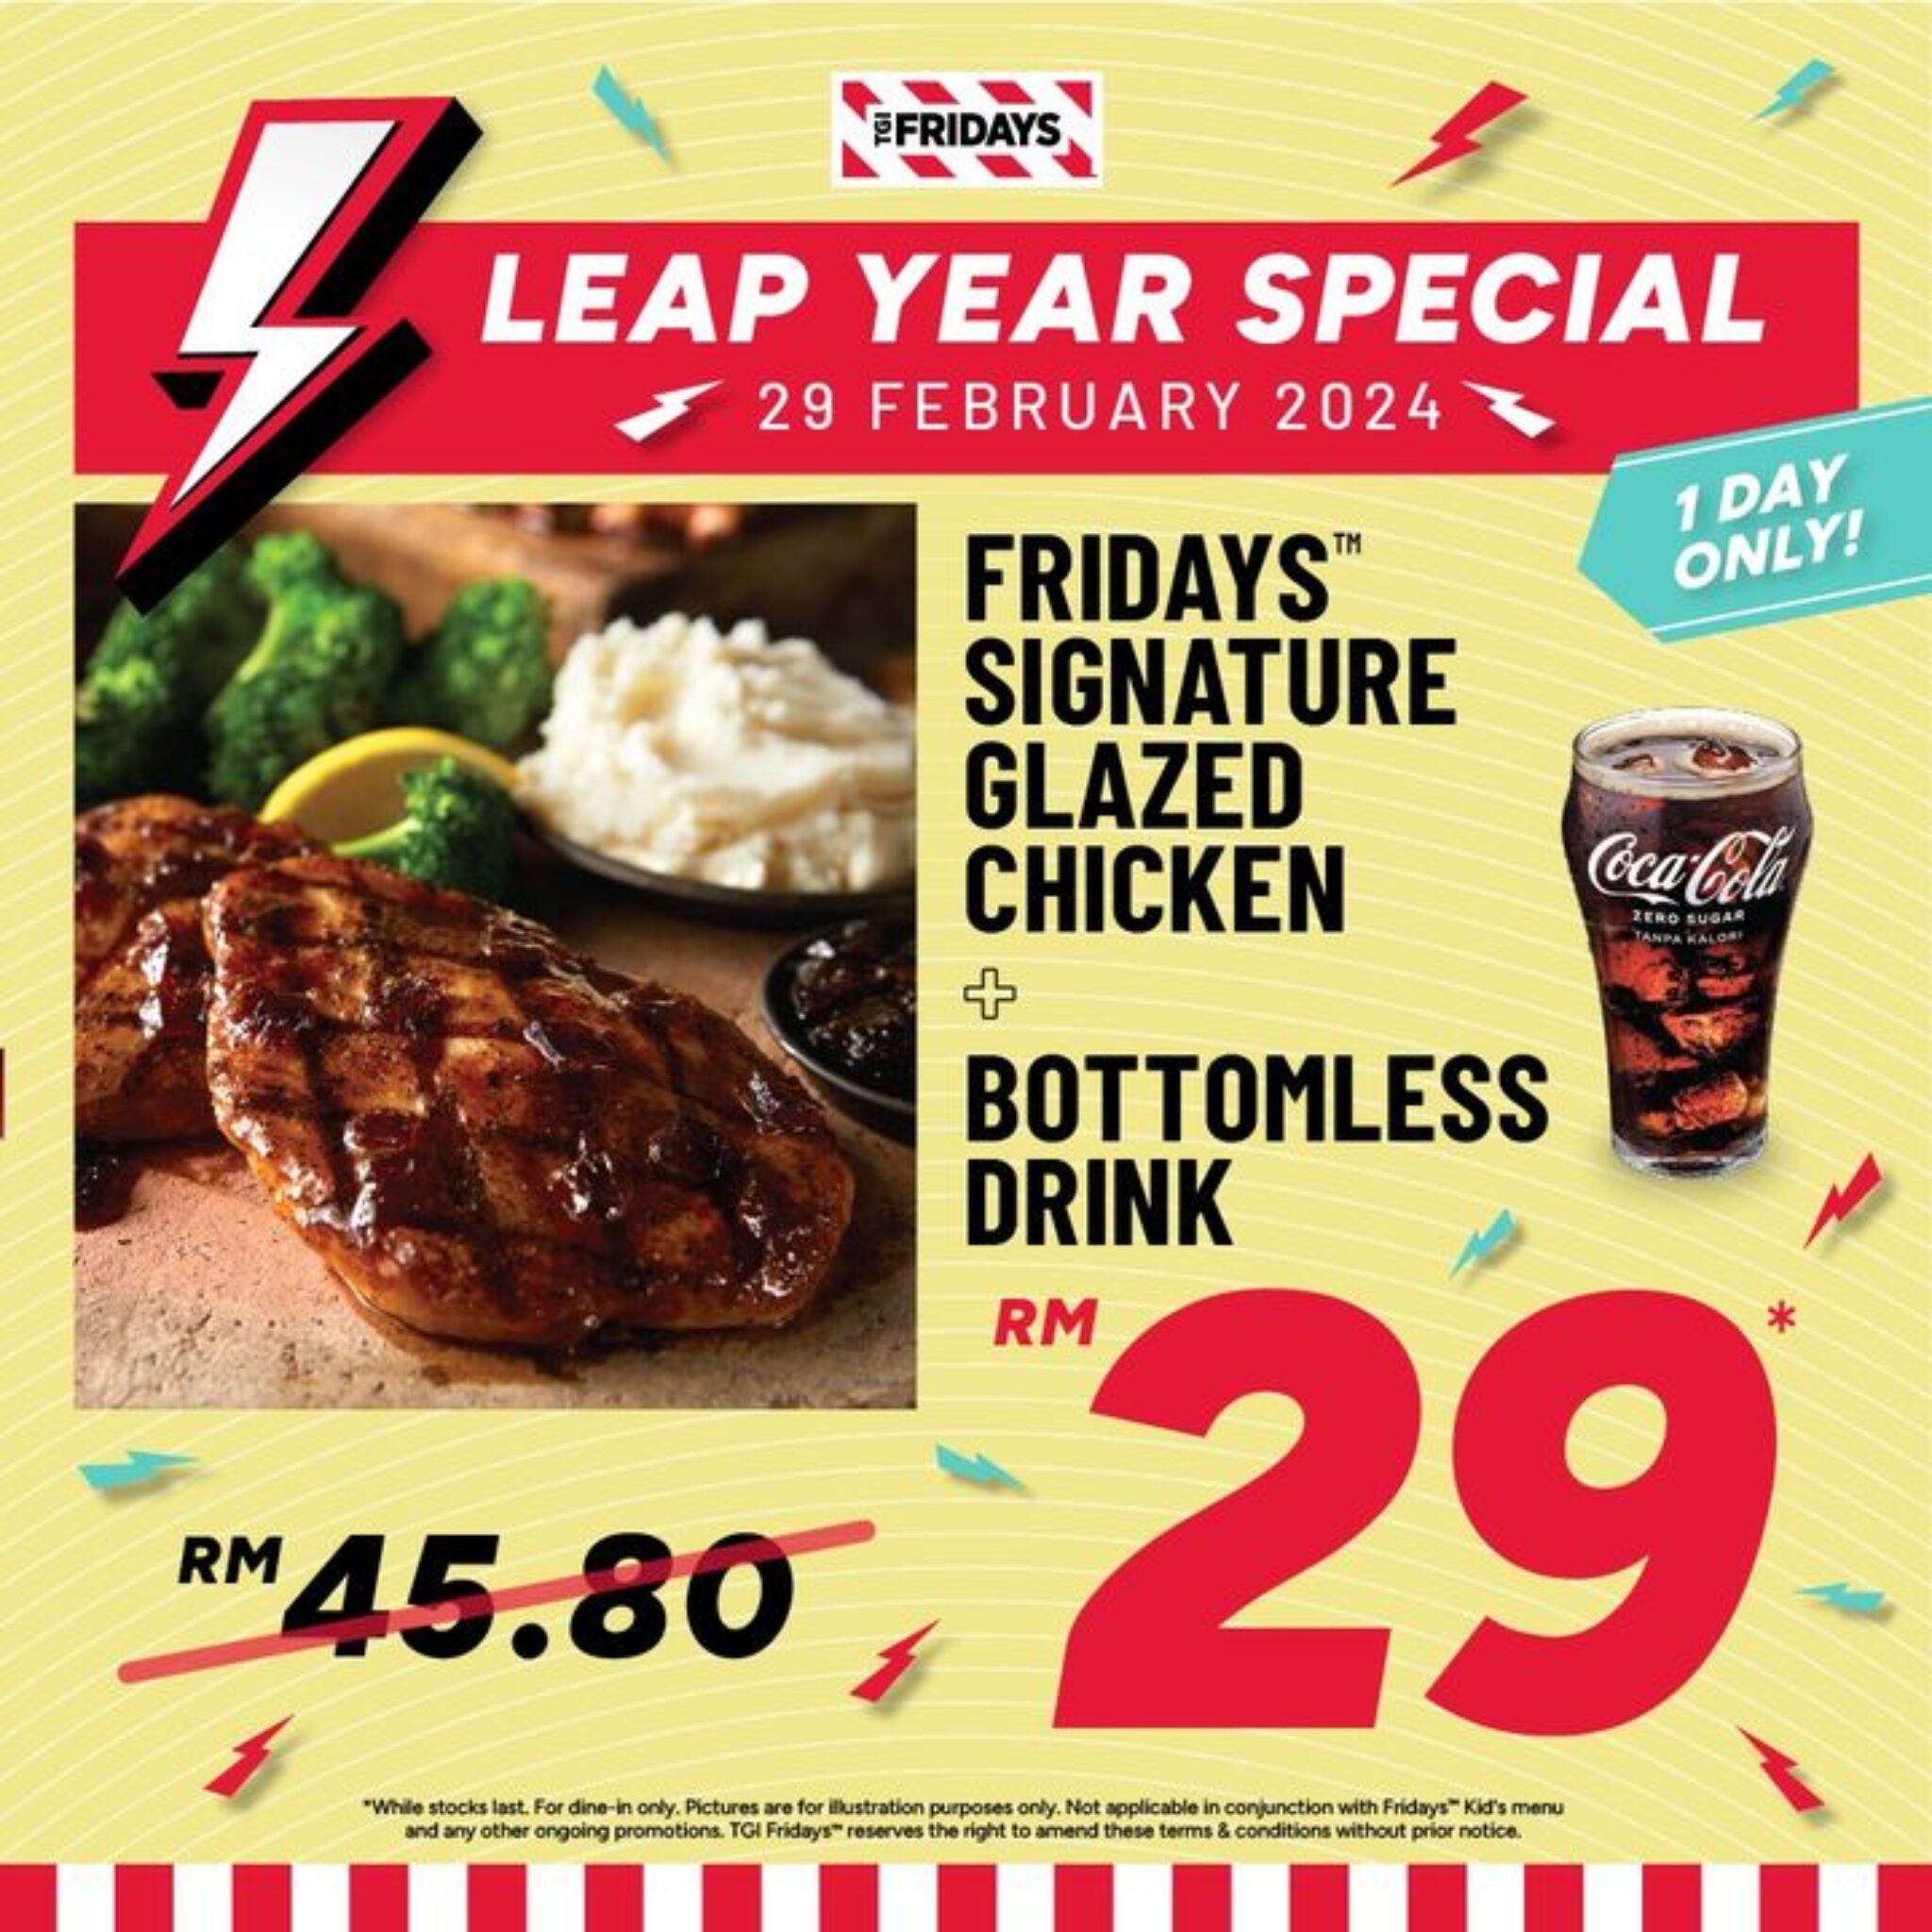 TGI Fridays Leap Year 2024 Special Promo Grab Signature Glazed Chicken